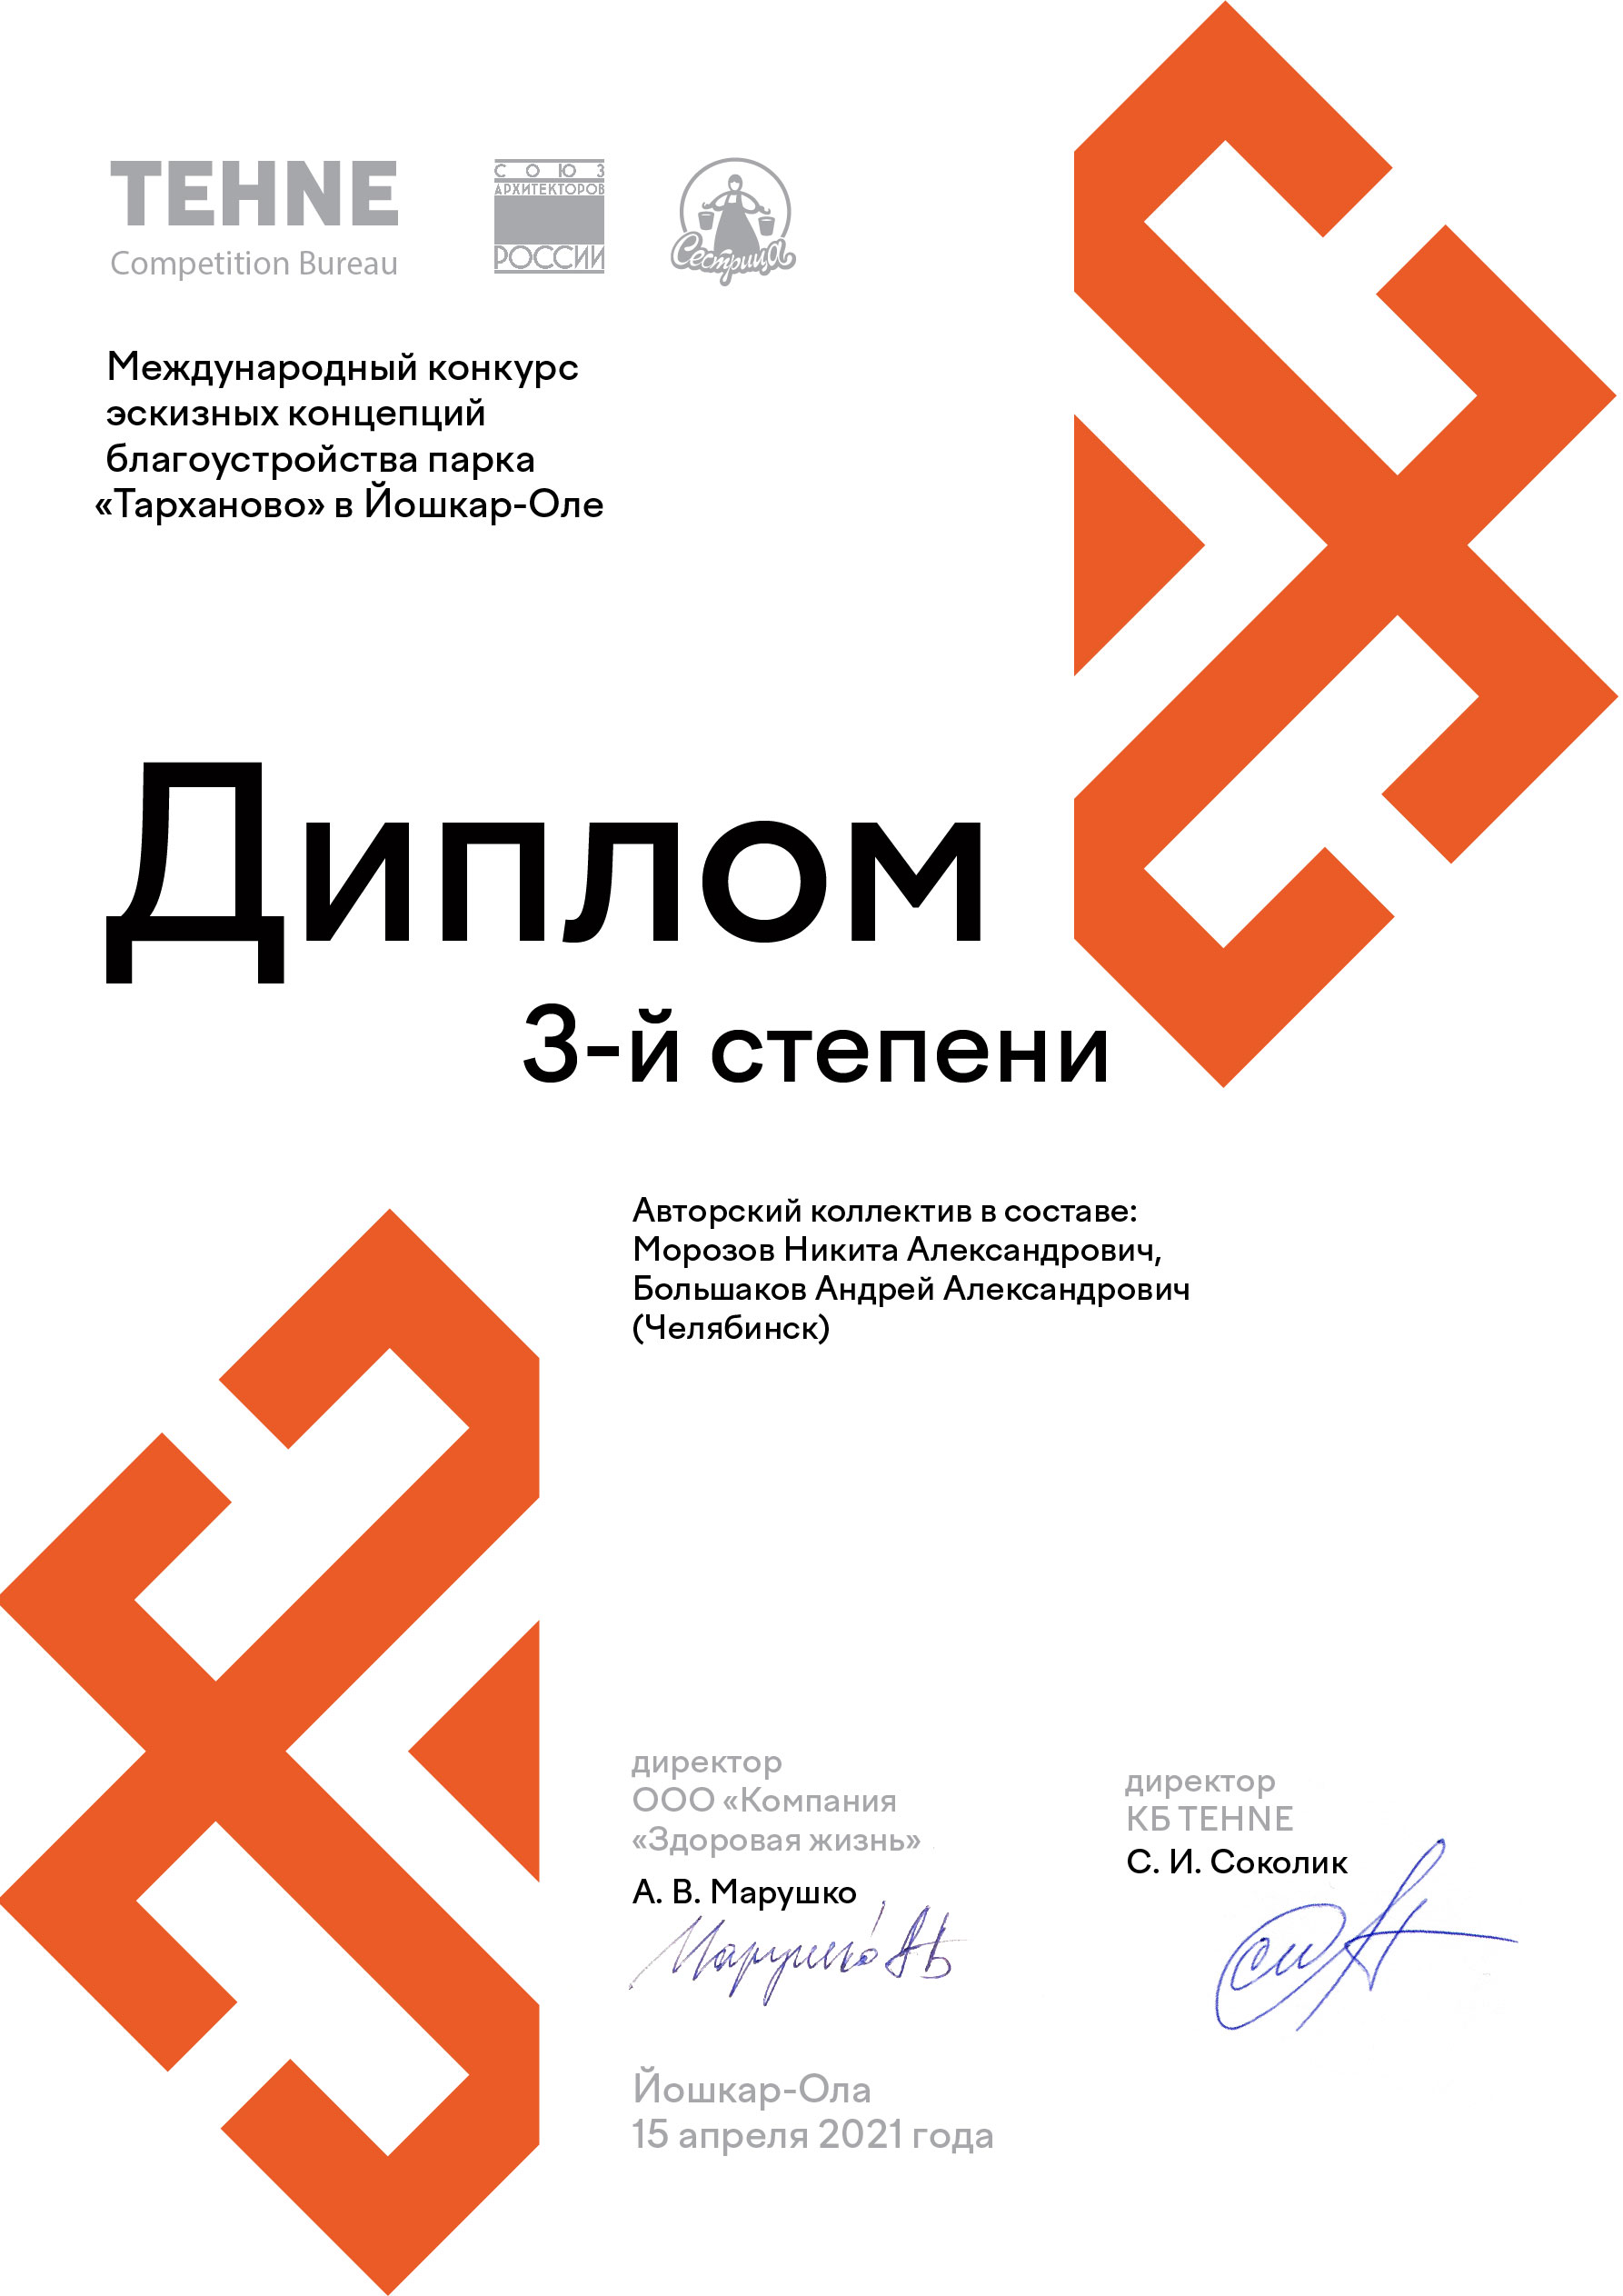 Авторский коллектив: Морозов Никита Александрович, Большаков Андрей Александрович (Челябинск)